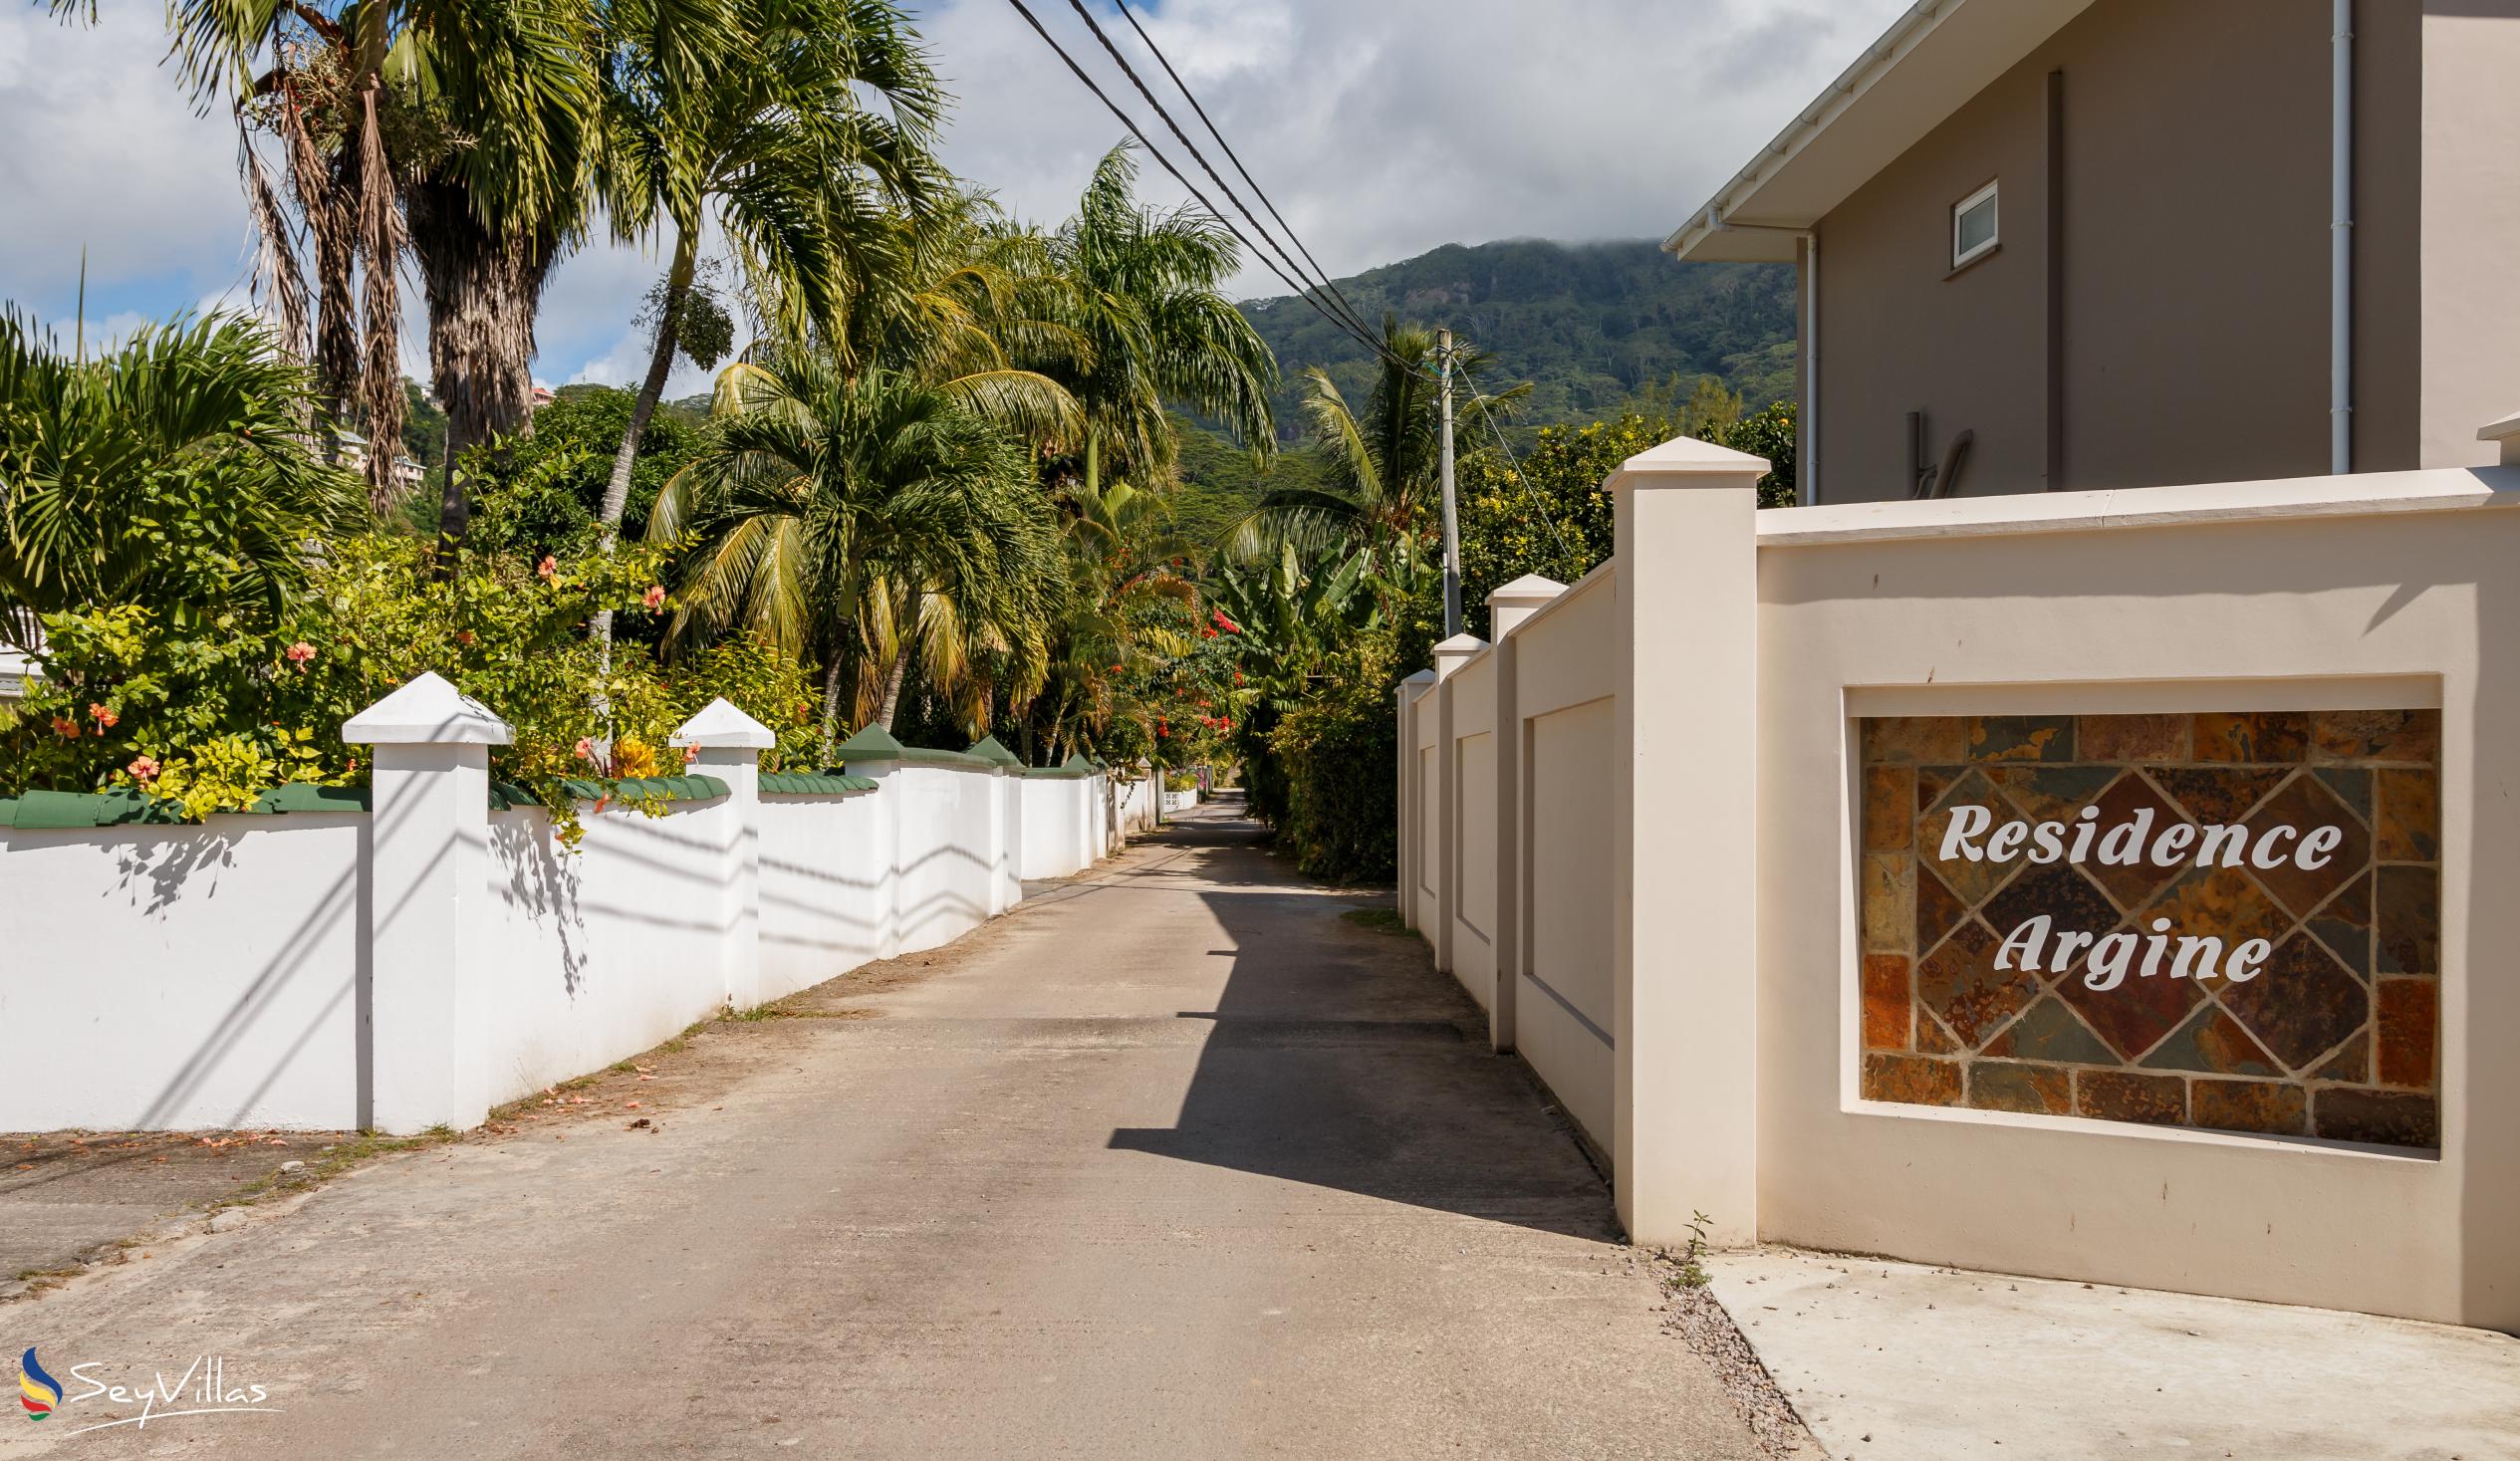 Foto 21: Residence Argine - Location - Mahé (Seychelles)